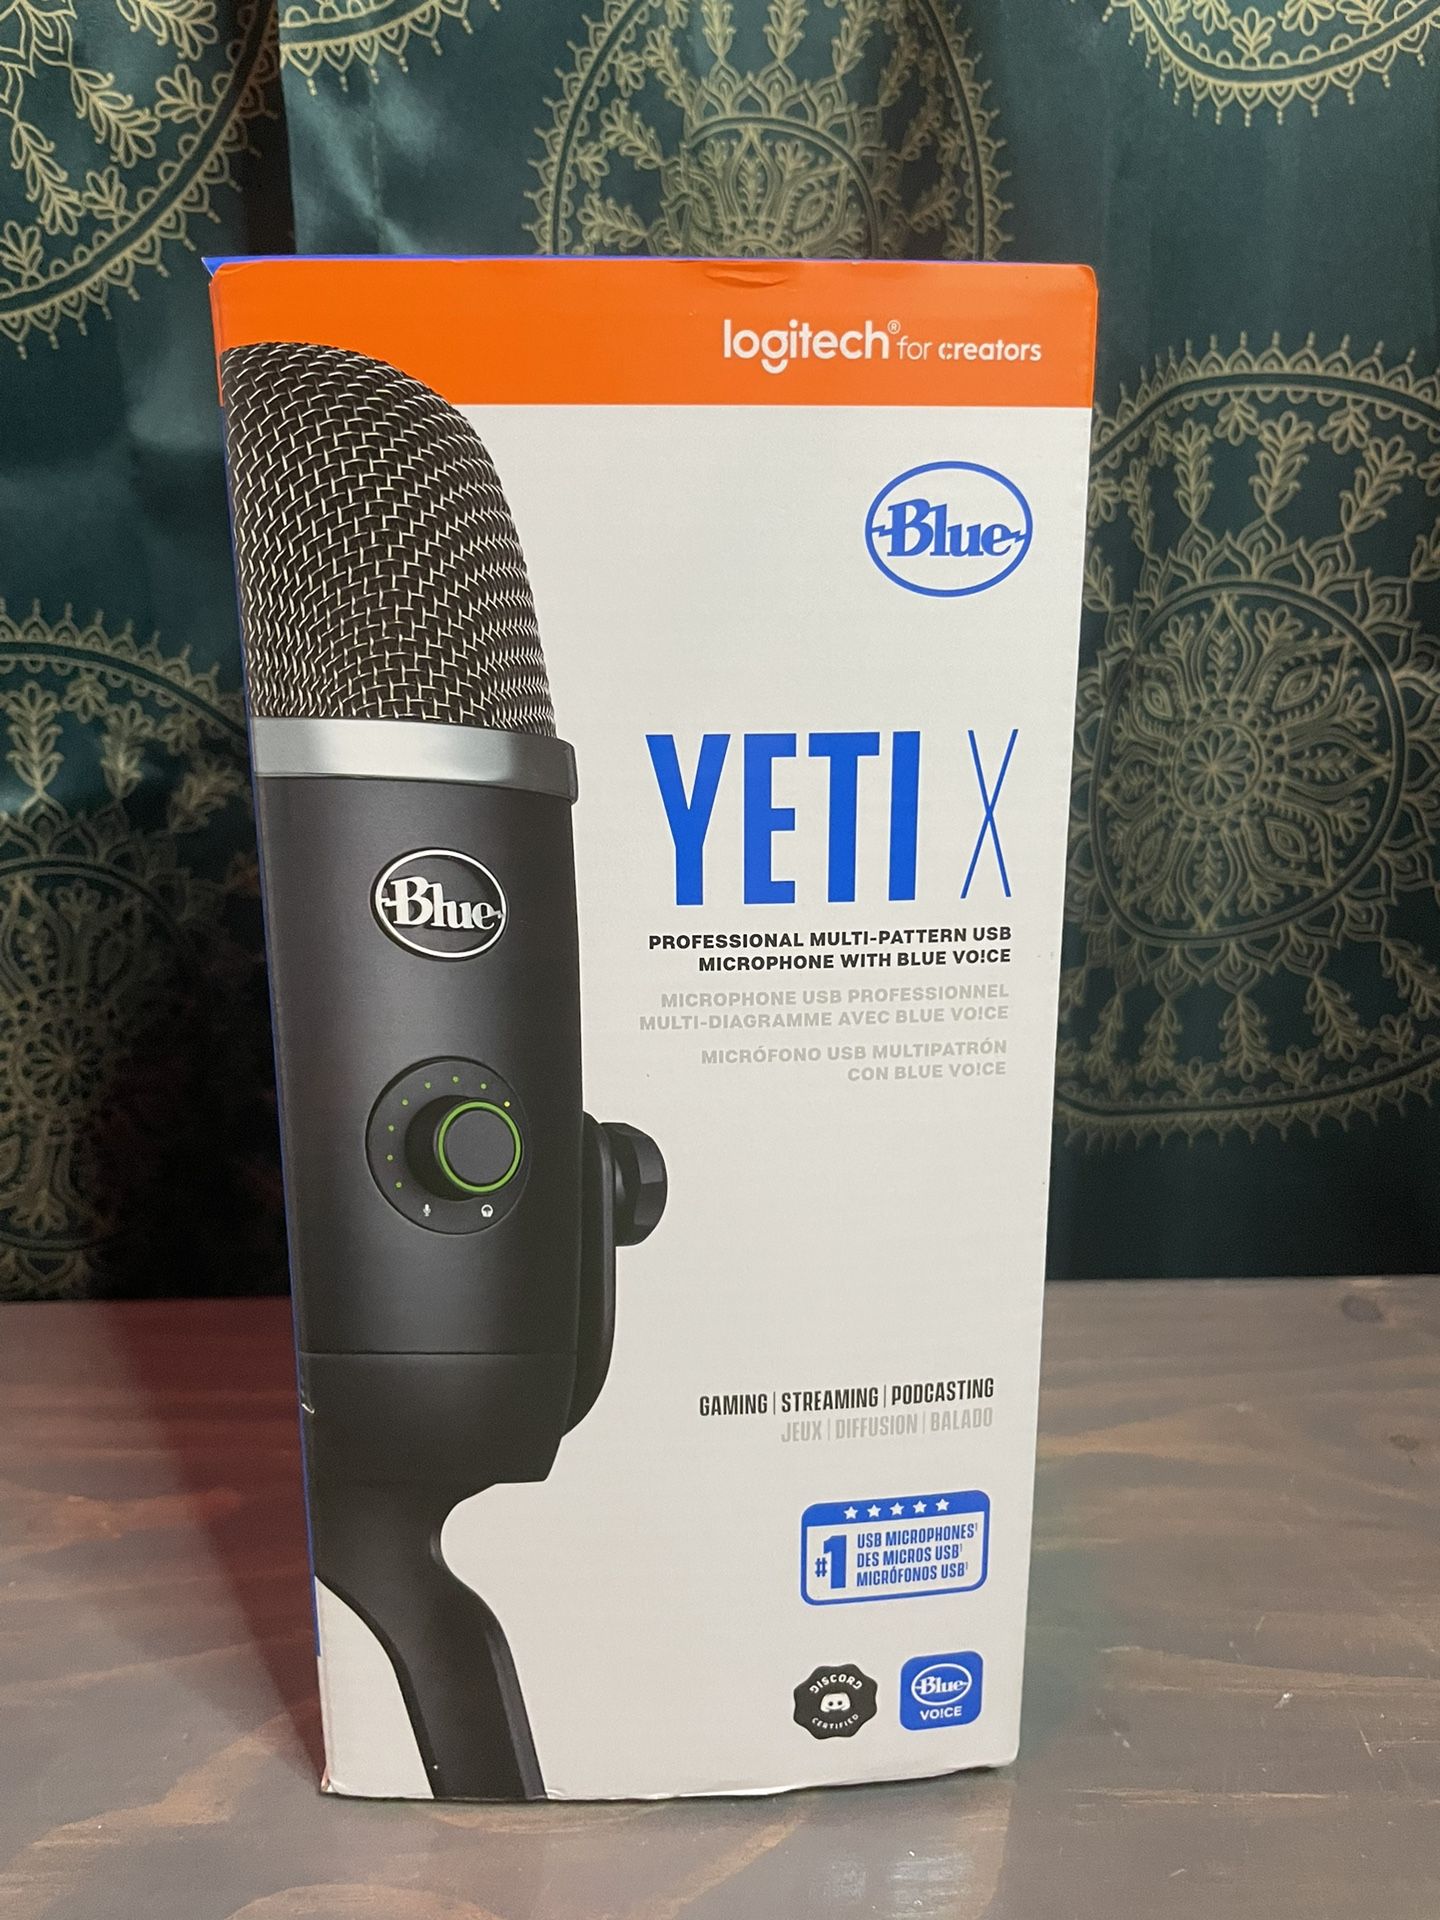 Yeti X Professional USB Multi-Pattern Condenser Microphone